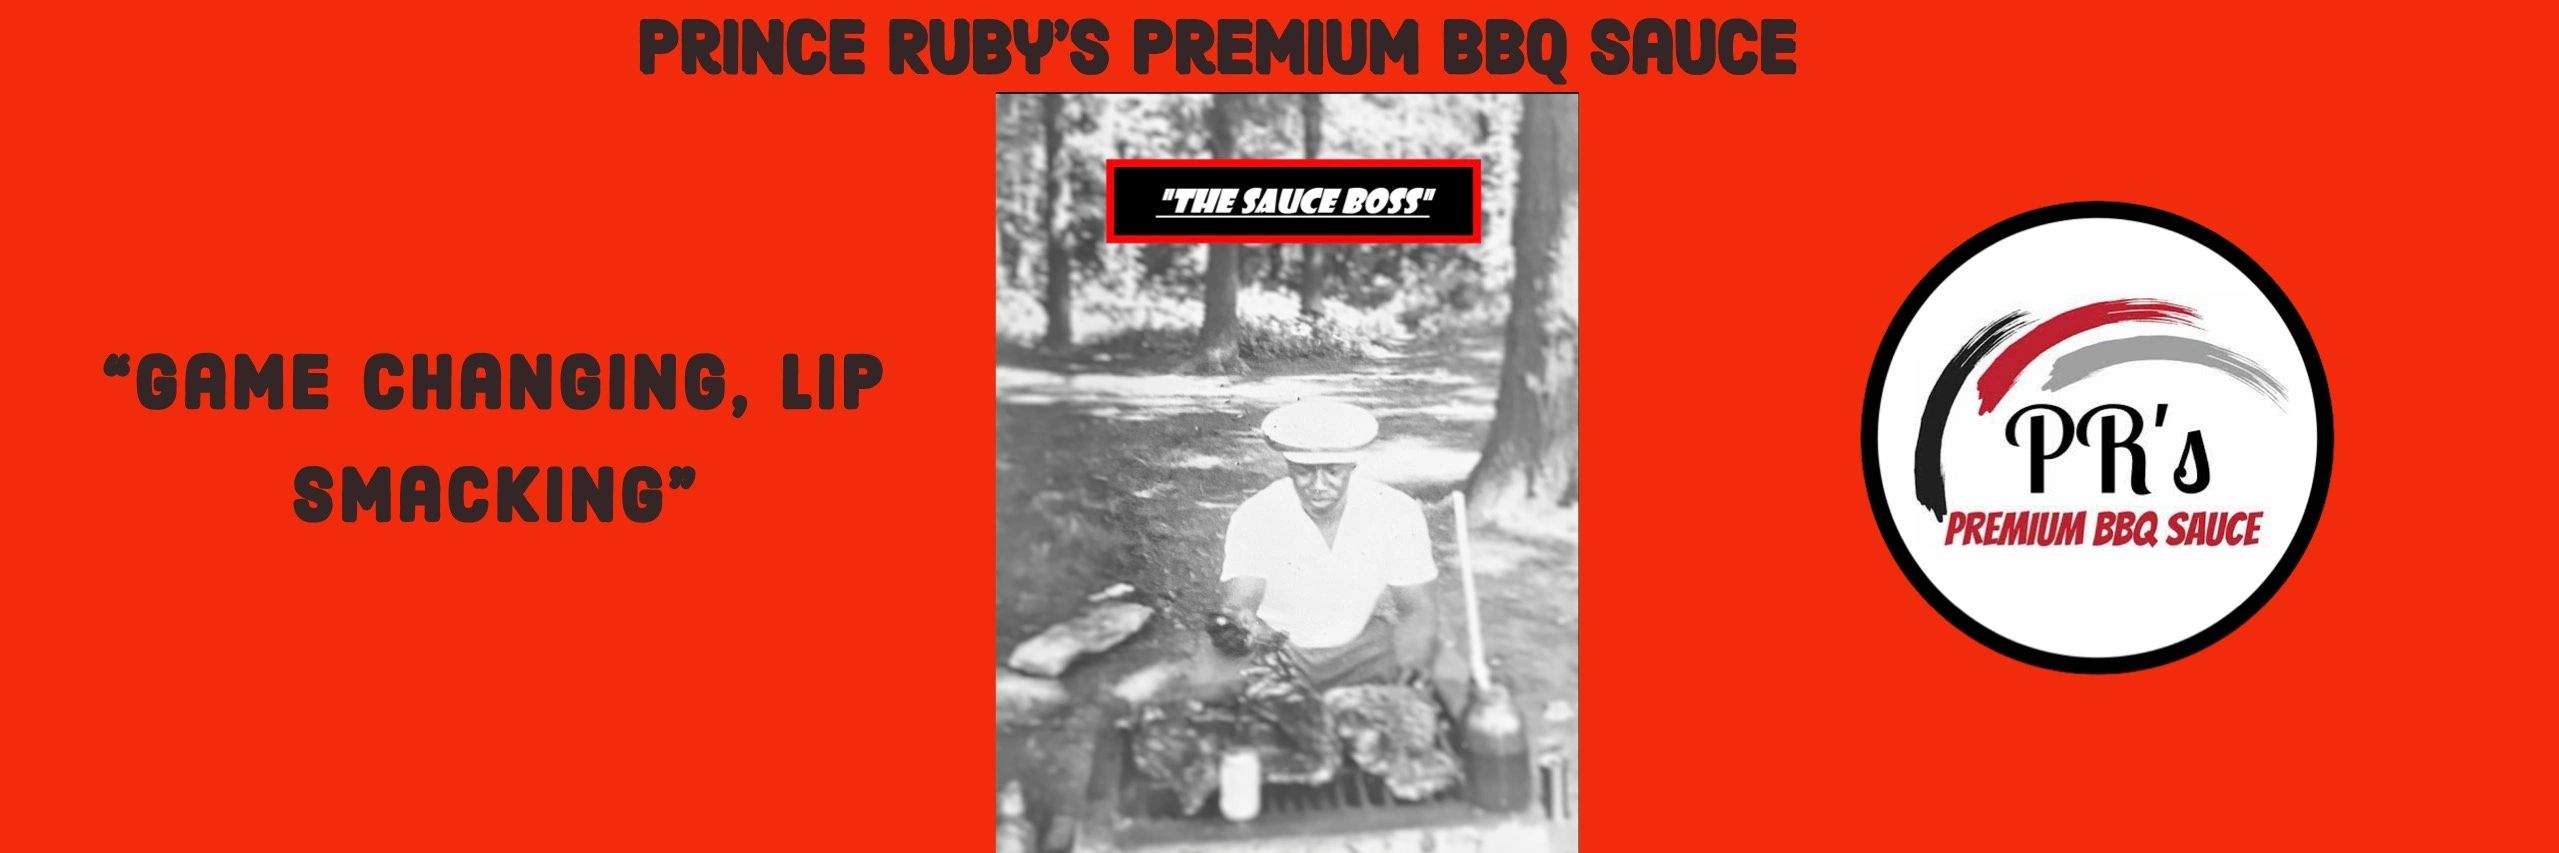 PRINCE RUBY'S PREMIUM BBQ SAUCE